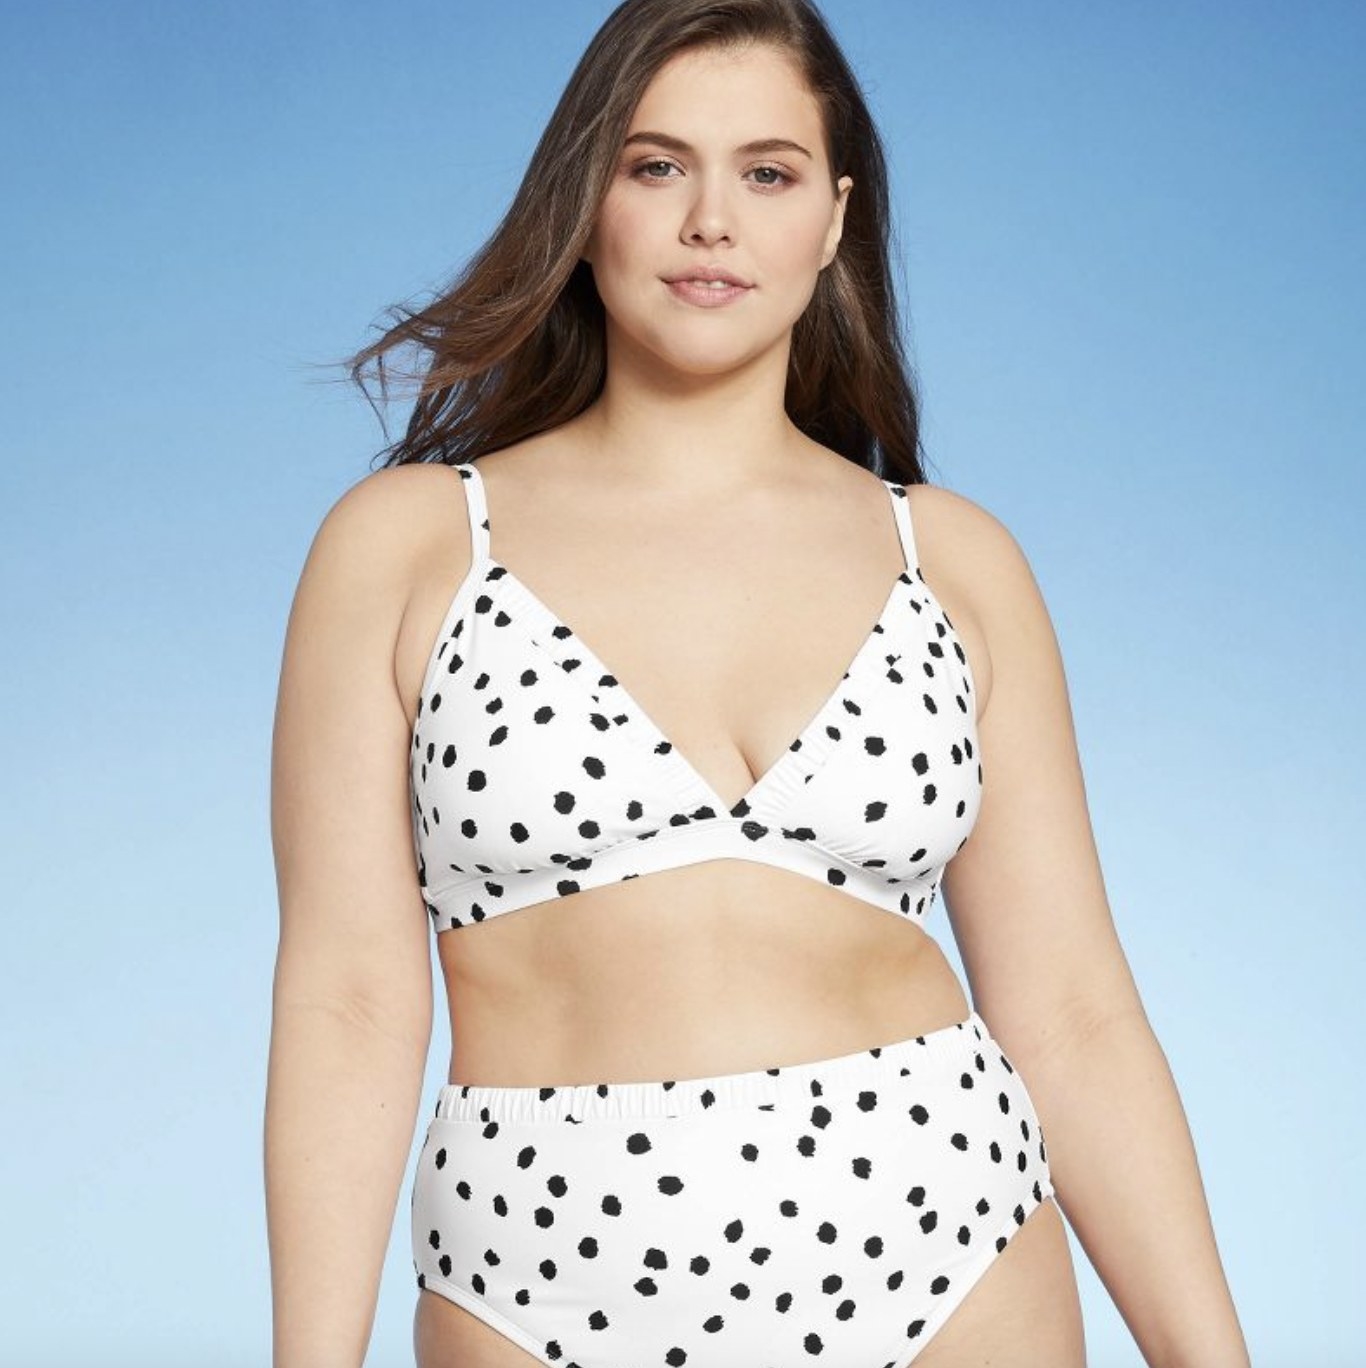 A person wearing a polka dot pattern bikini top and bottom